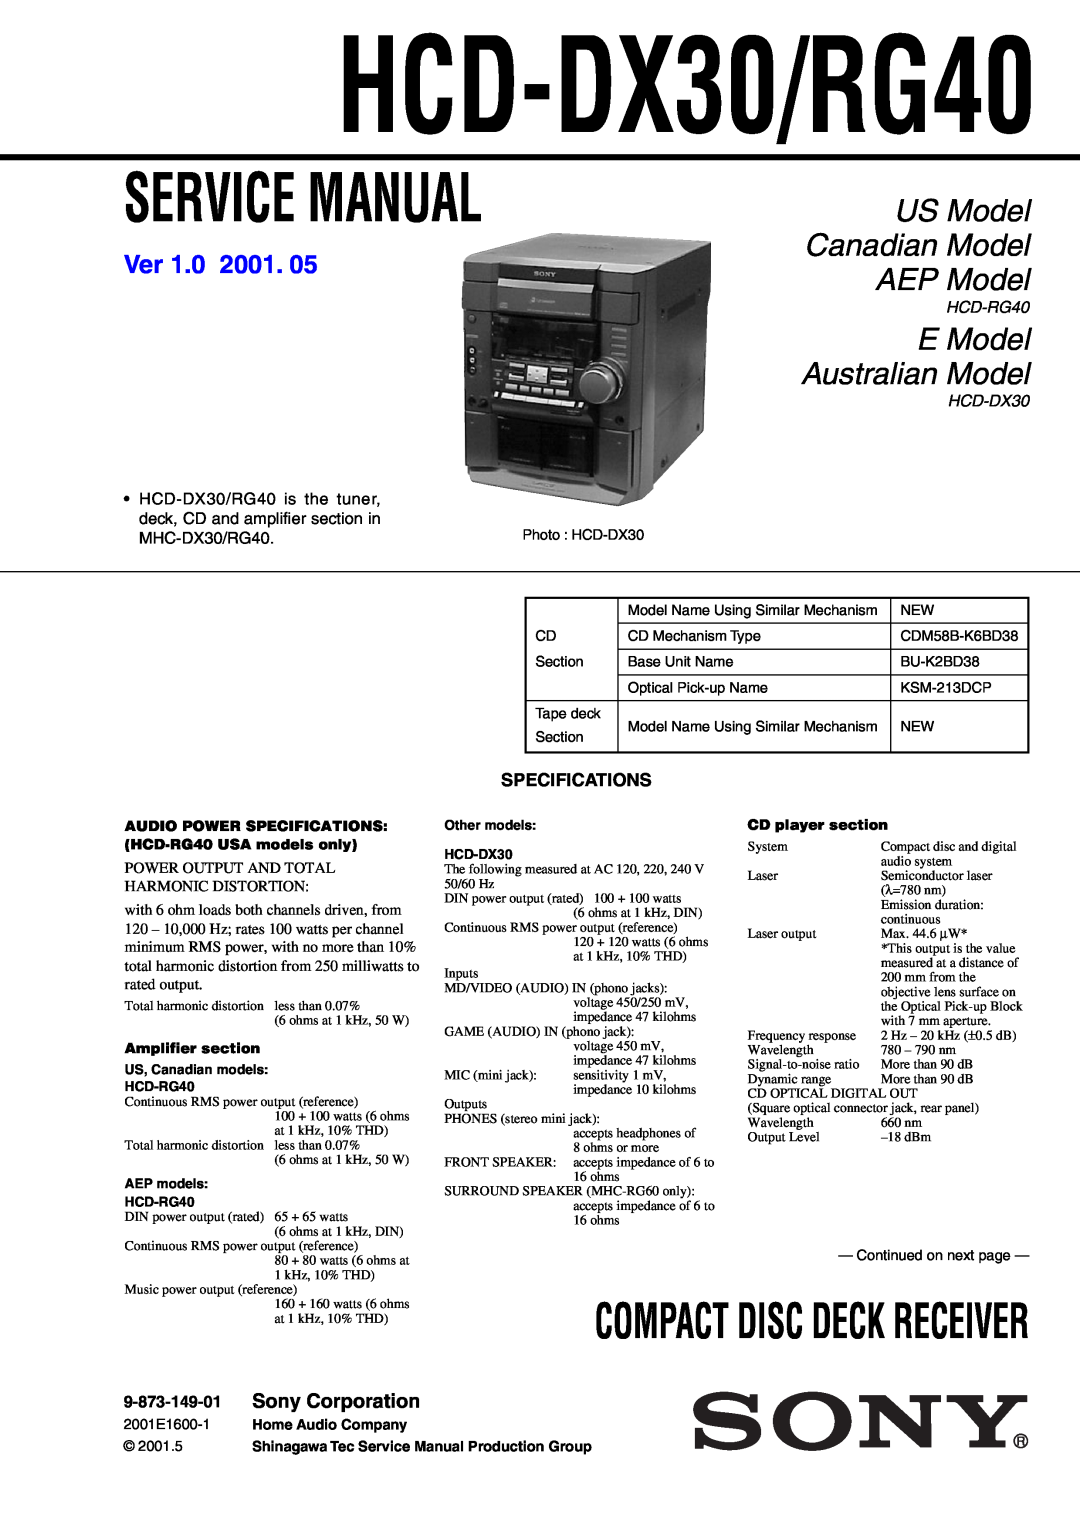 Sony HCD-RG40 specifications Ver 1.0 2001, HCD-DX30/RG40, Service Manual, US Model Canadian Model AEP Model 